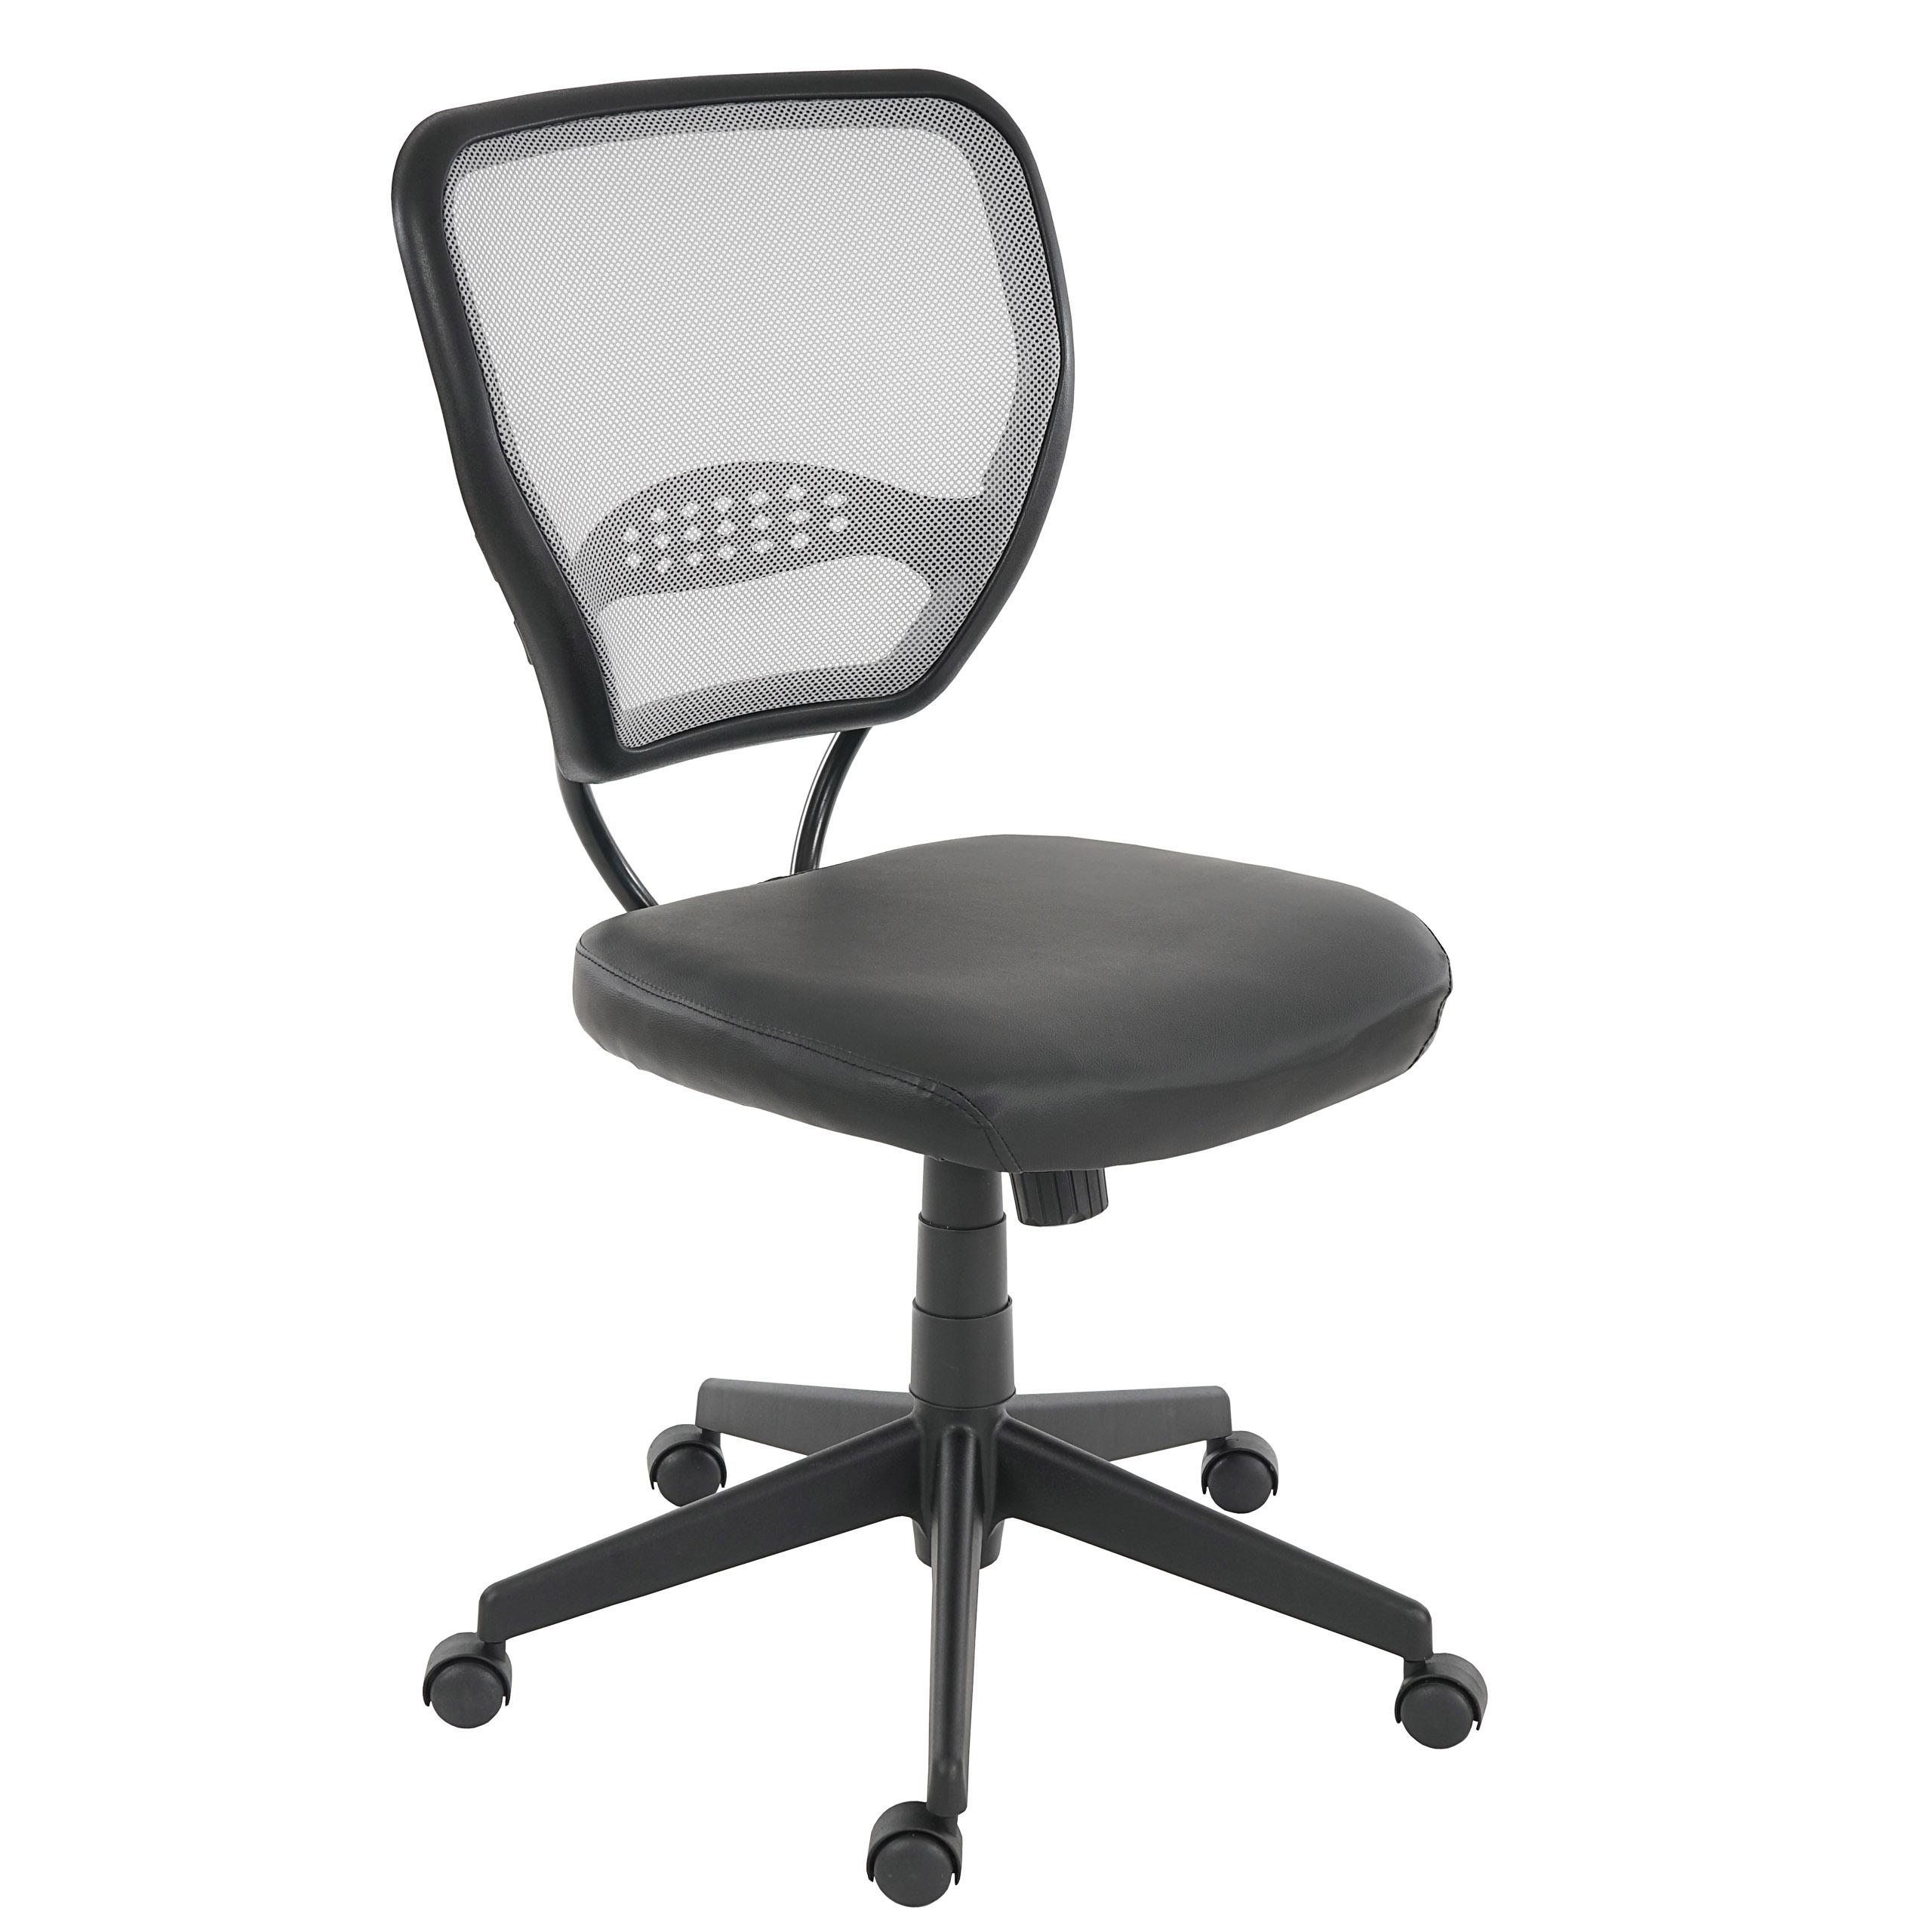 XXL-Bürostuhl TENOYA LEDER OHNE ARMLEHNEN, bequeme Sitzpolsterung, Rückenlehne mit Netzbezug, Farbe Grau